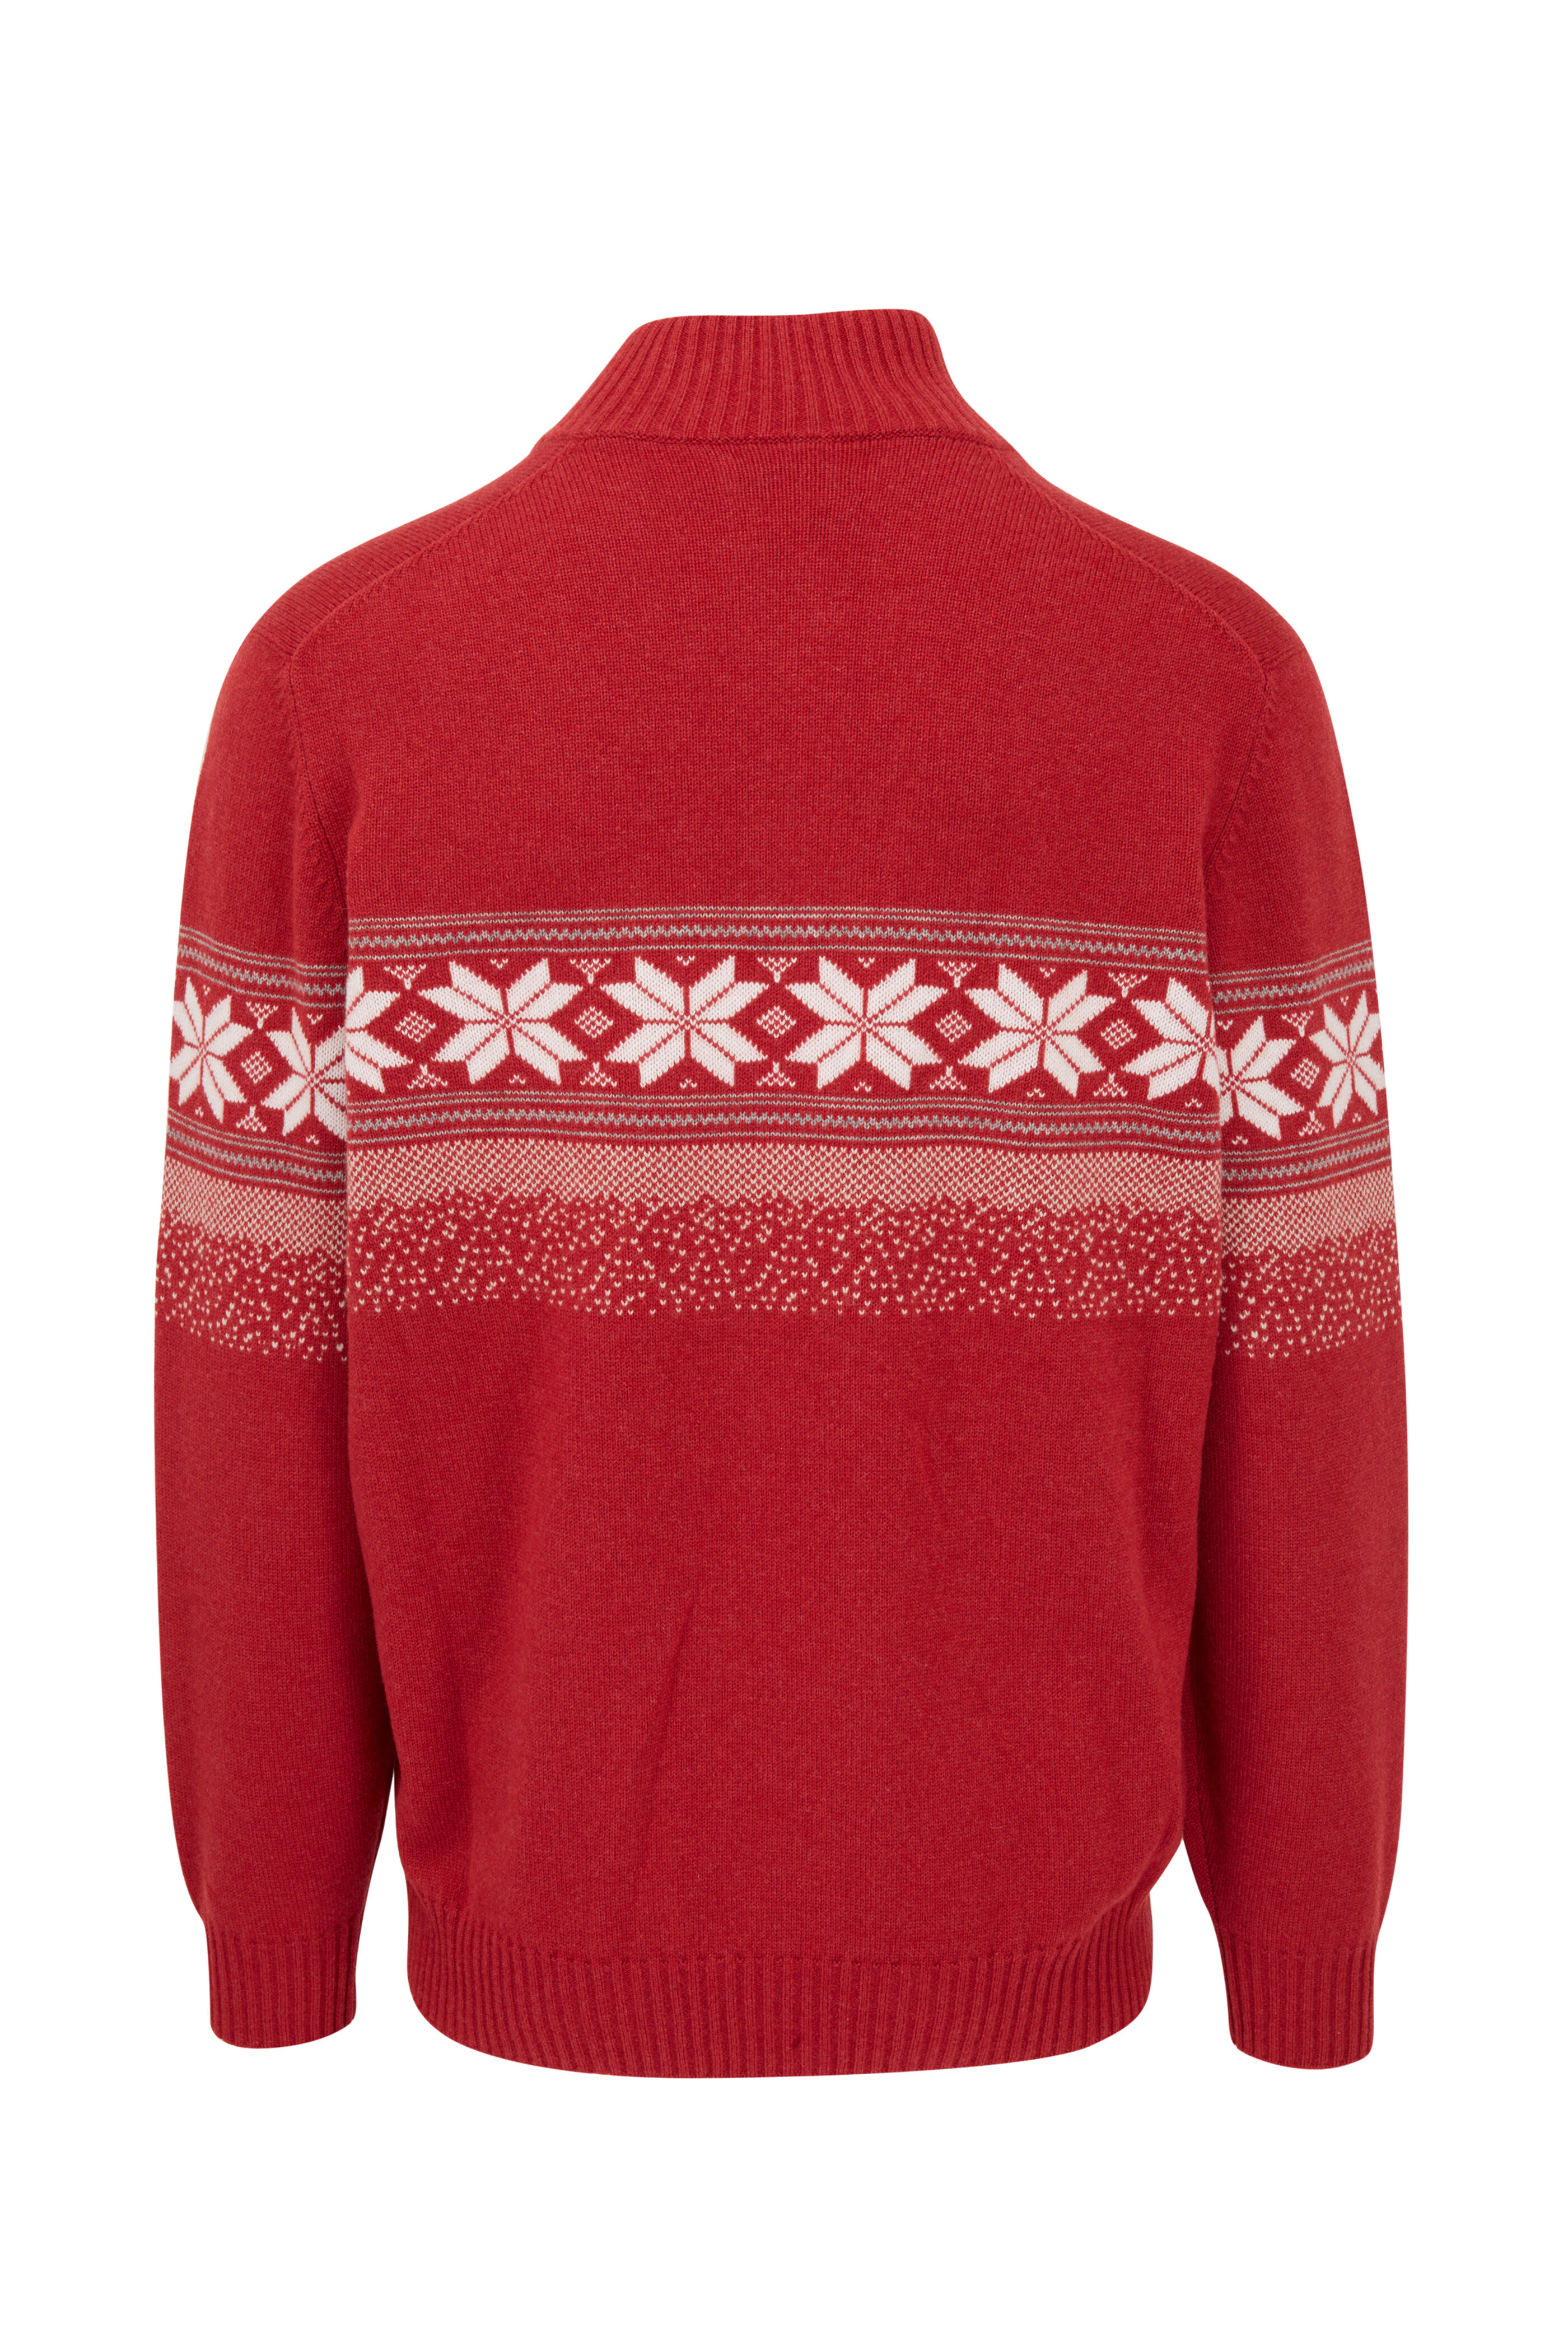 Brunello Cucinelli - Red Fair Isle Print Cashmere Quarter Zip Sweater